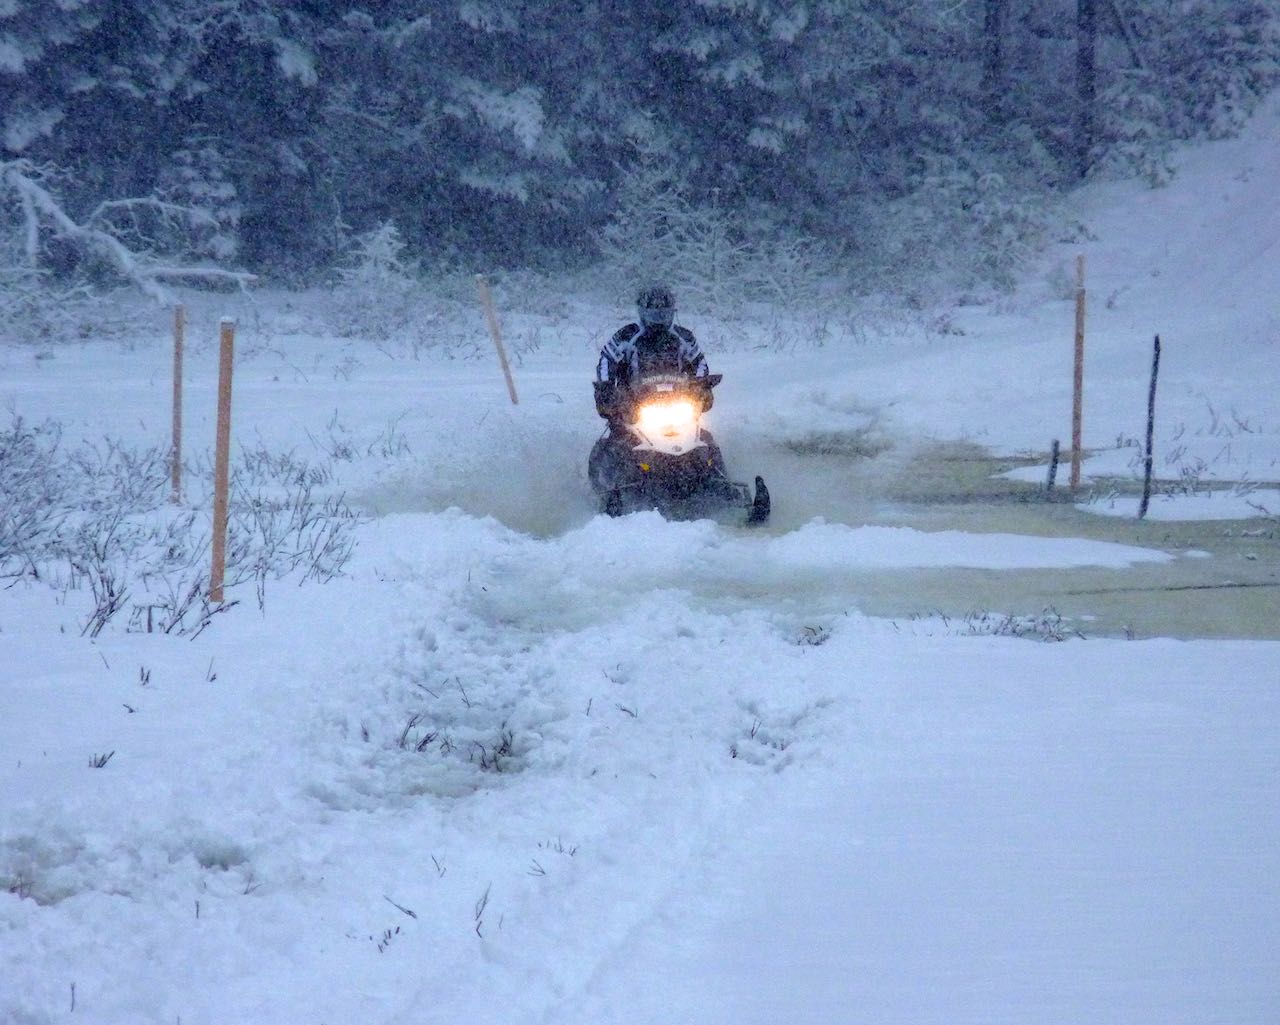 meltdown snowmobile trail conditions